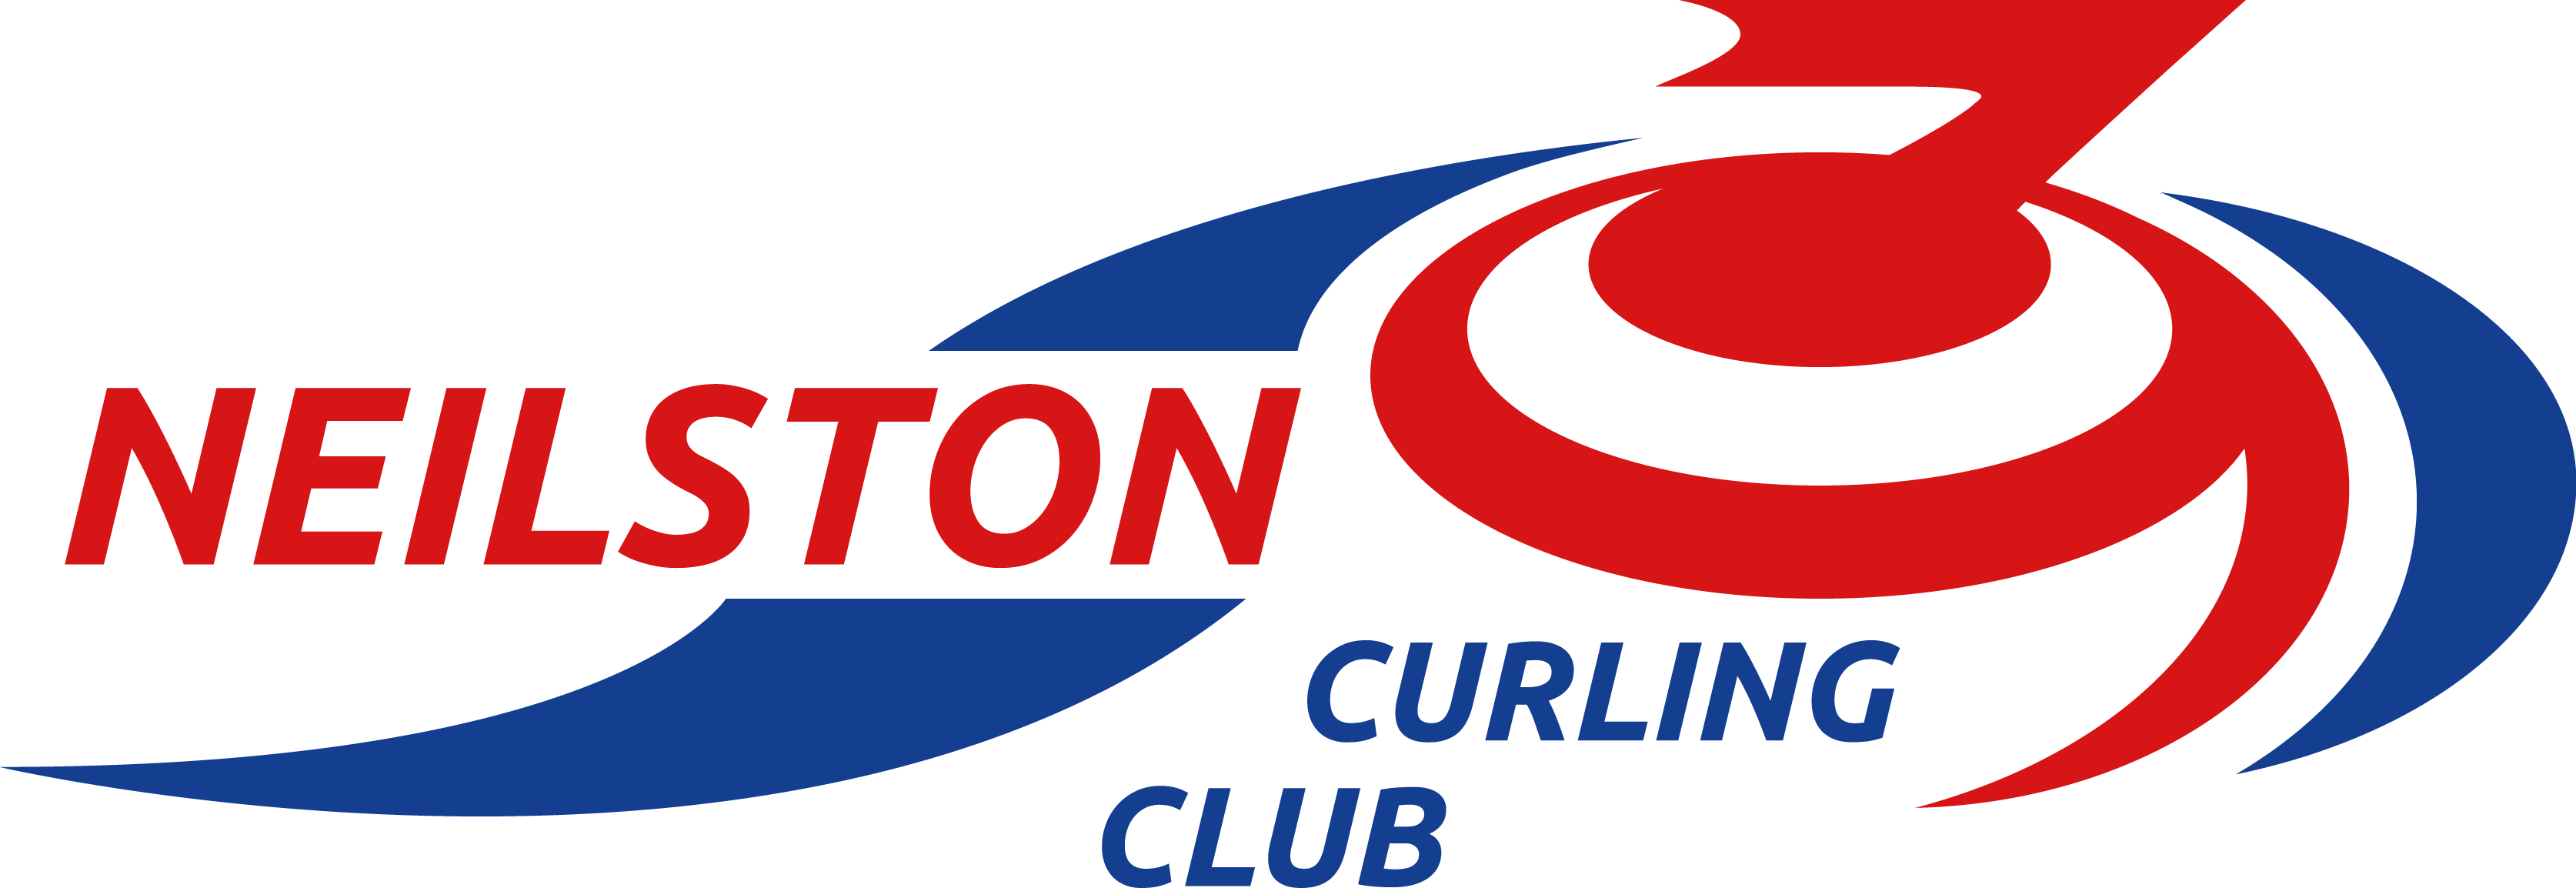 Neilston Curling Club